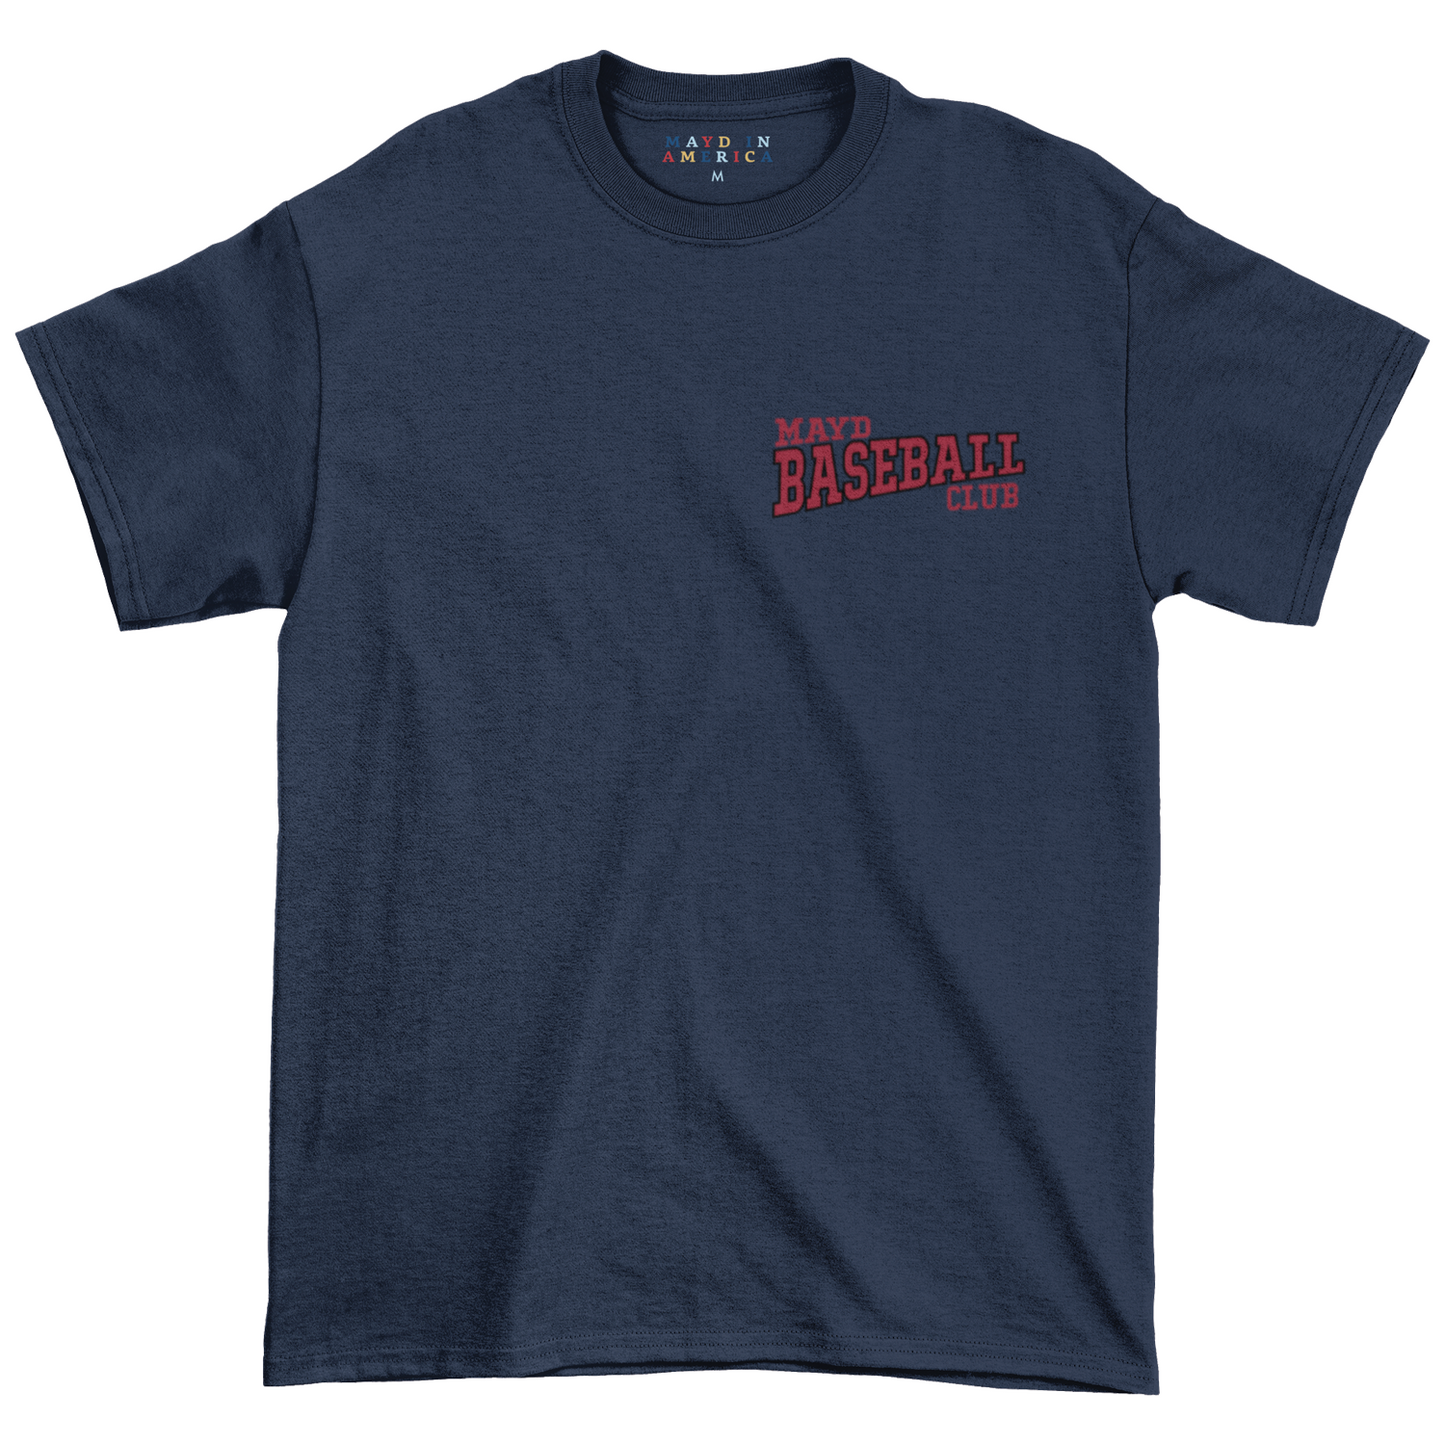 MAYD in America Baseball Club T-shirt